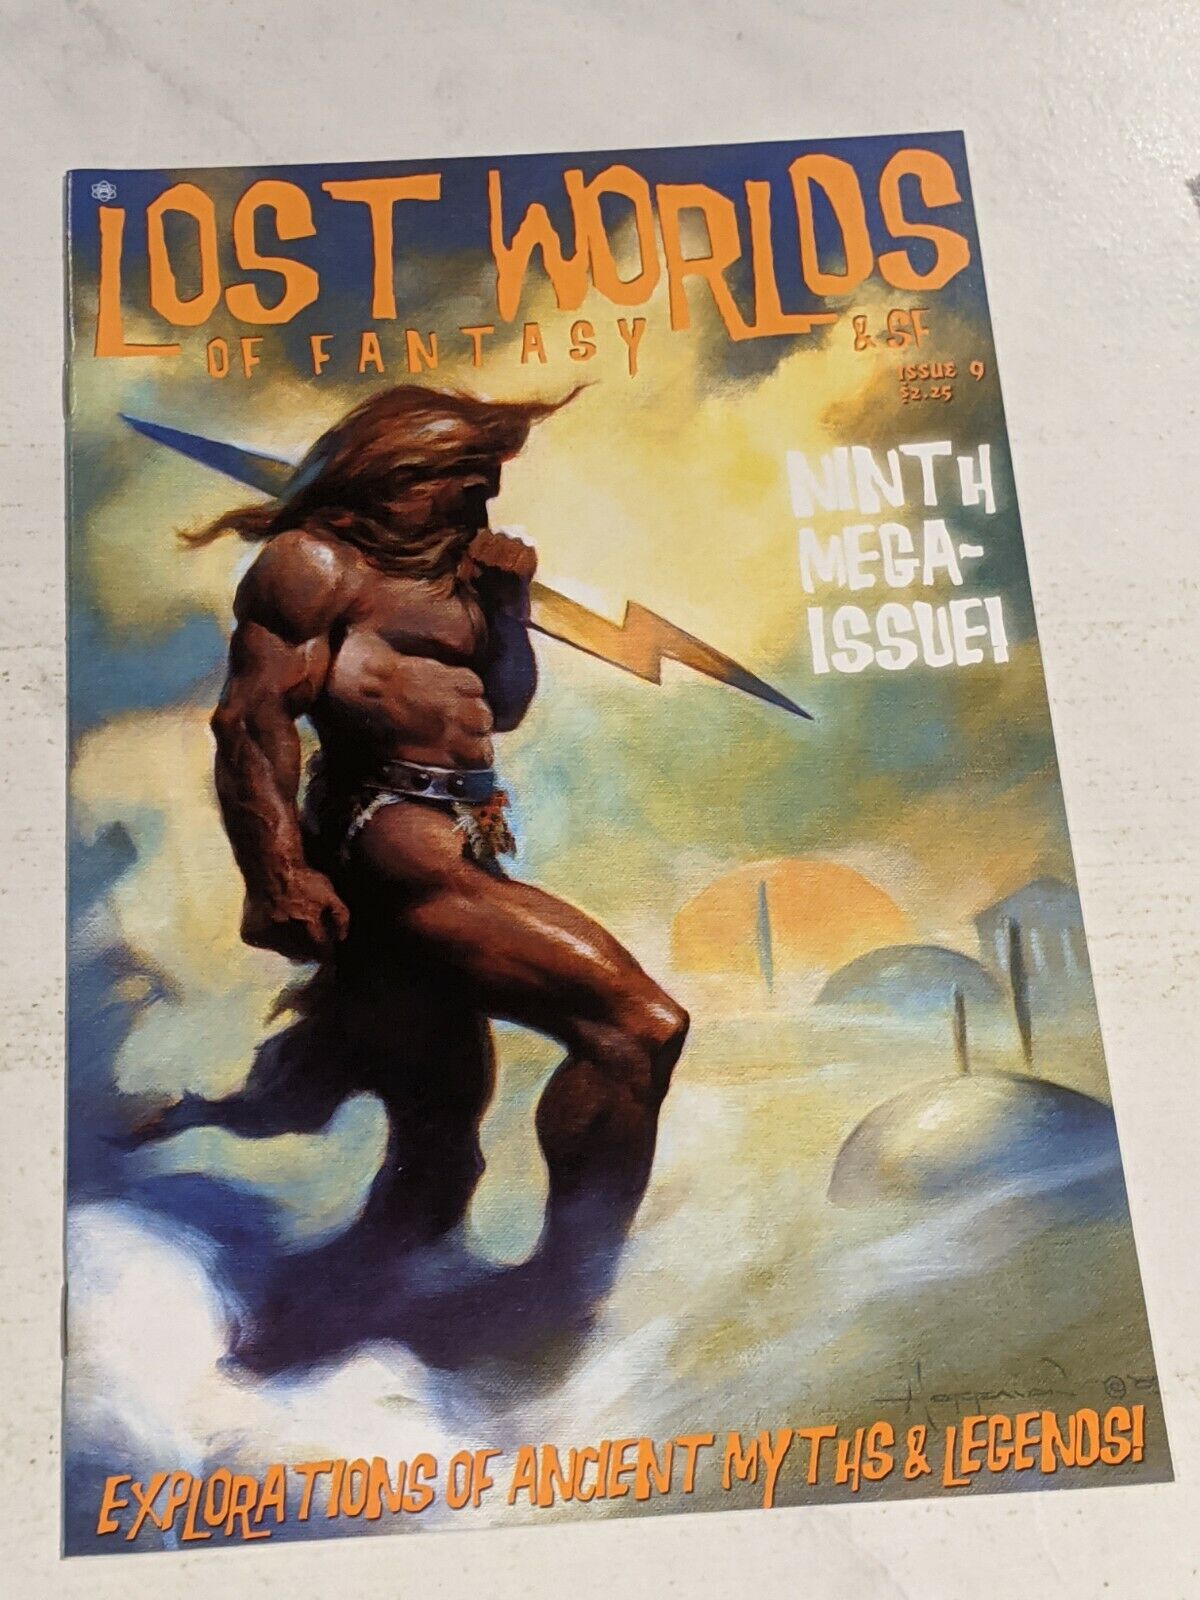 Lost Worlds Of Fantasy #9 April 2004 Antimatter Comics 